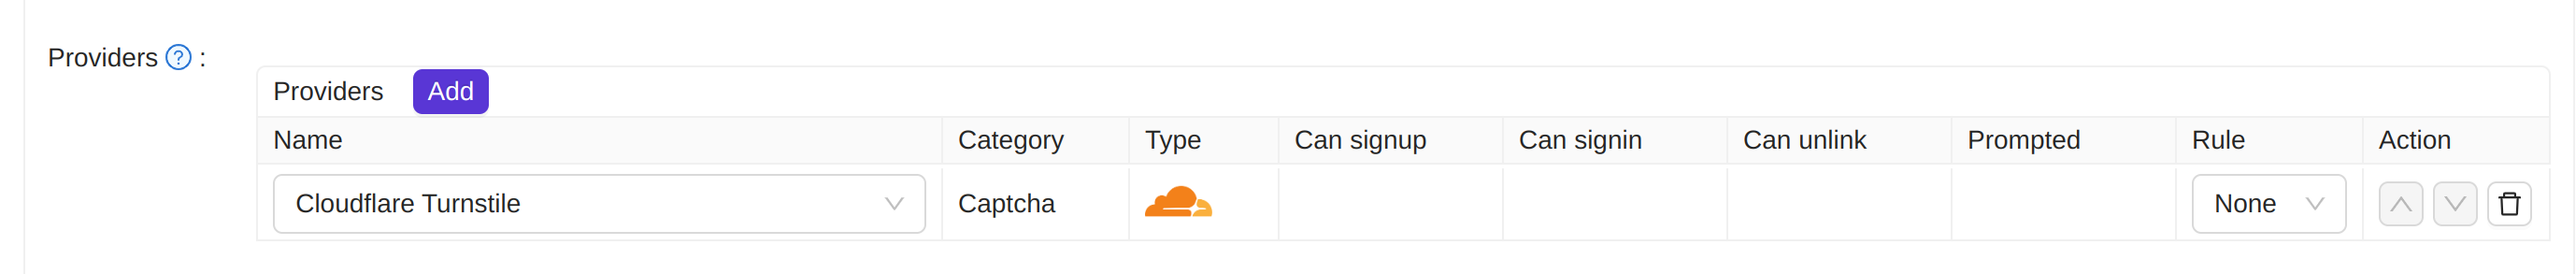 Aplicación proveedora de Cloudflare Turnstile